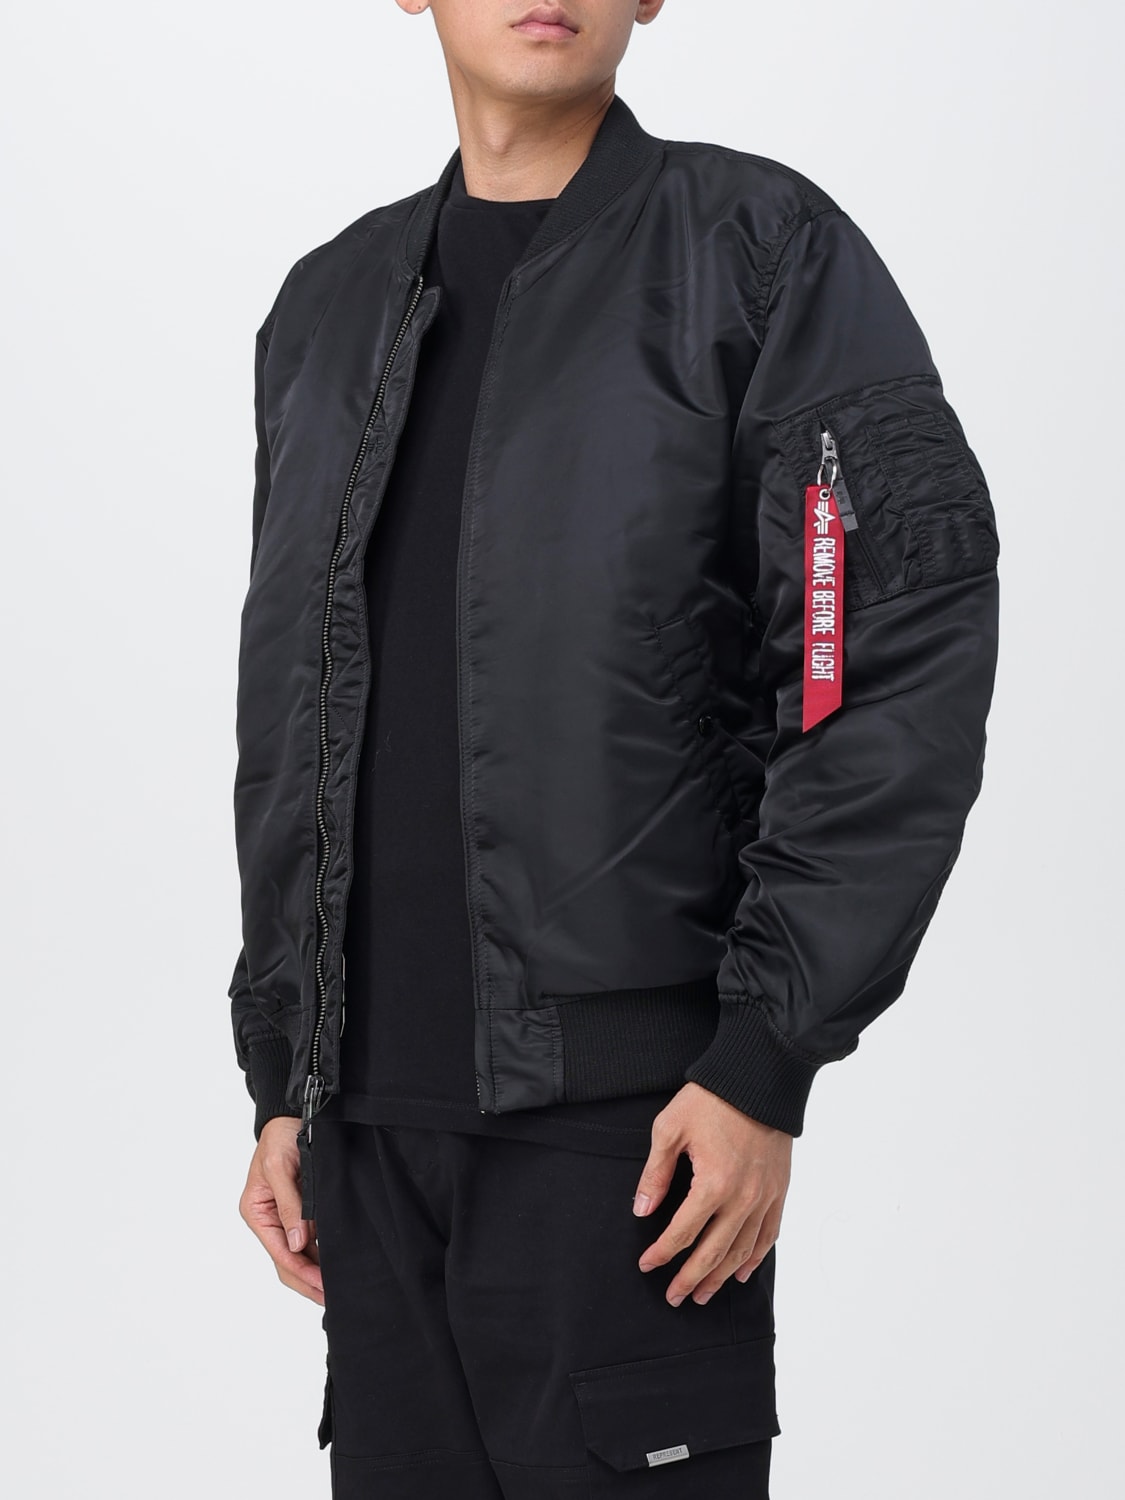 at ALPHA Black jacket jacket man INDUSTRIES: Industries online for Alpha - 138103 |